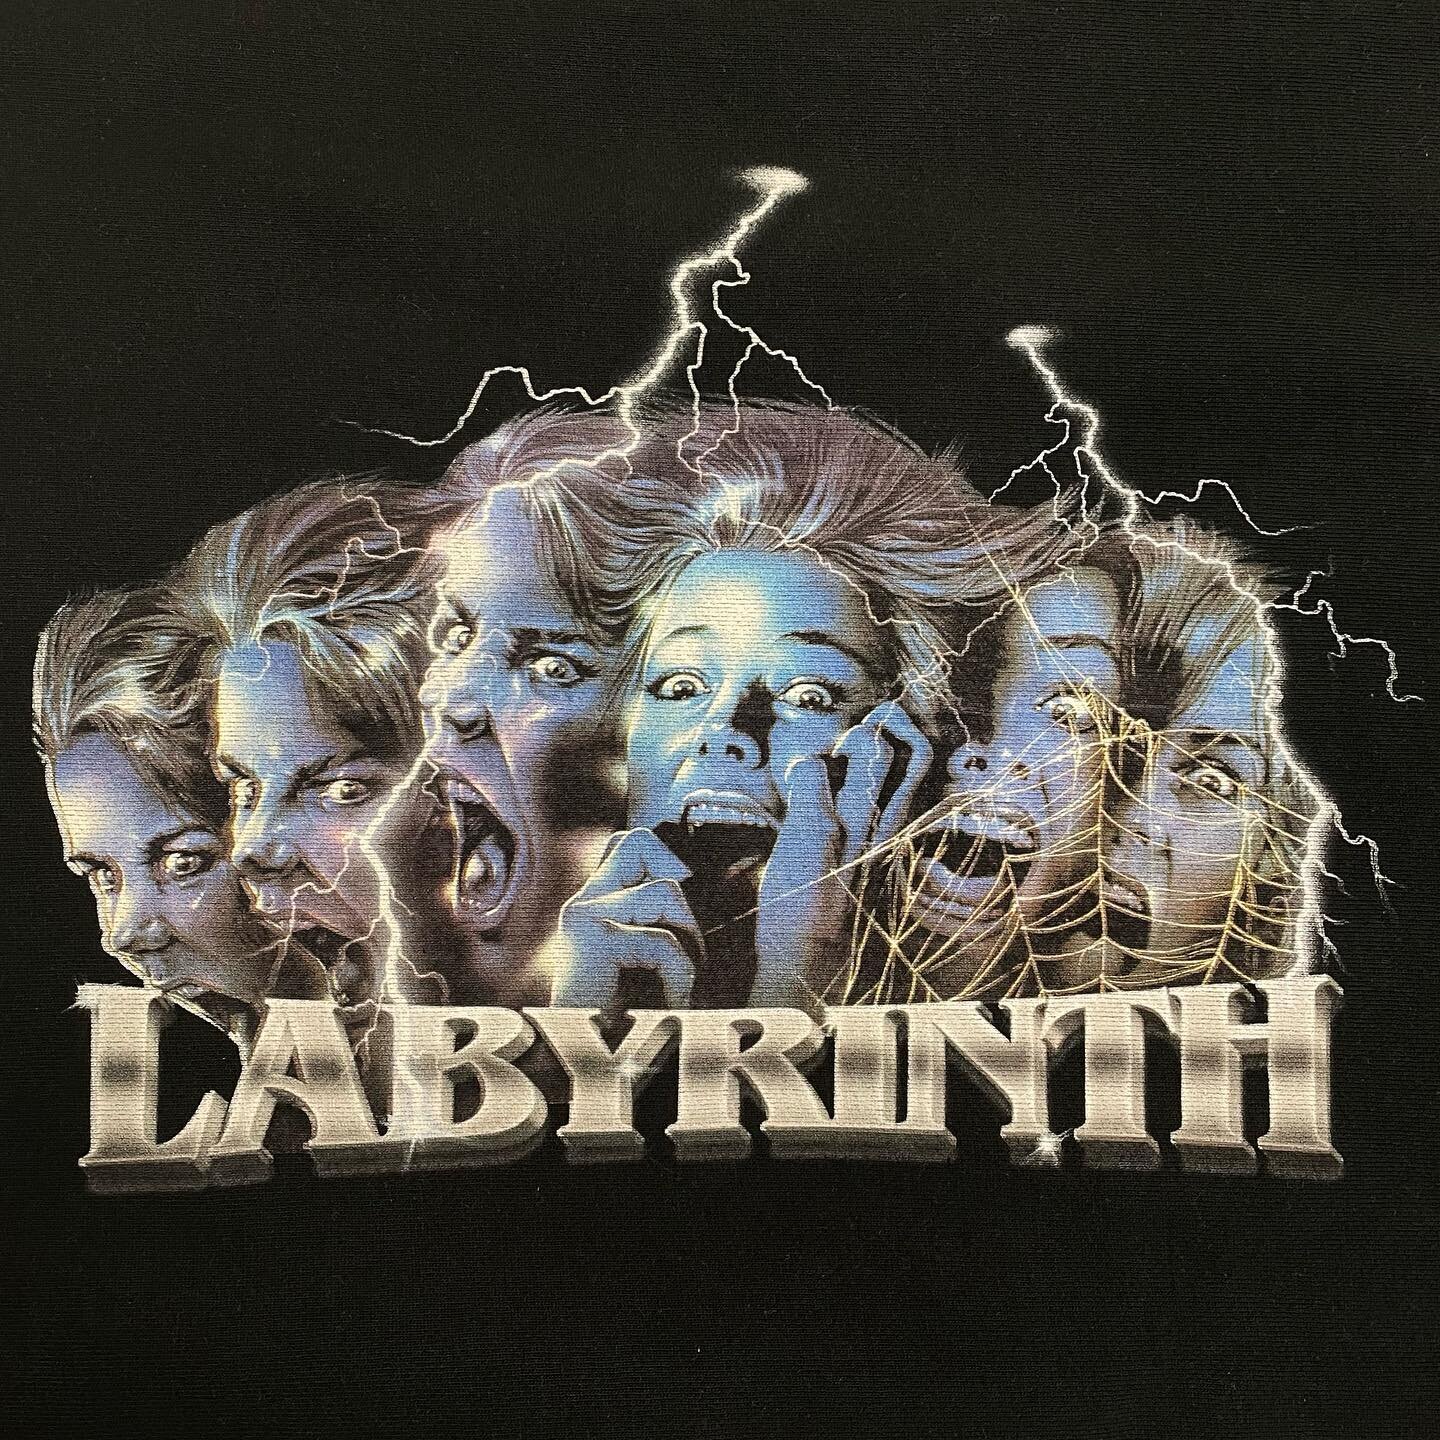 DTG Sweatshirt for Labyrinth